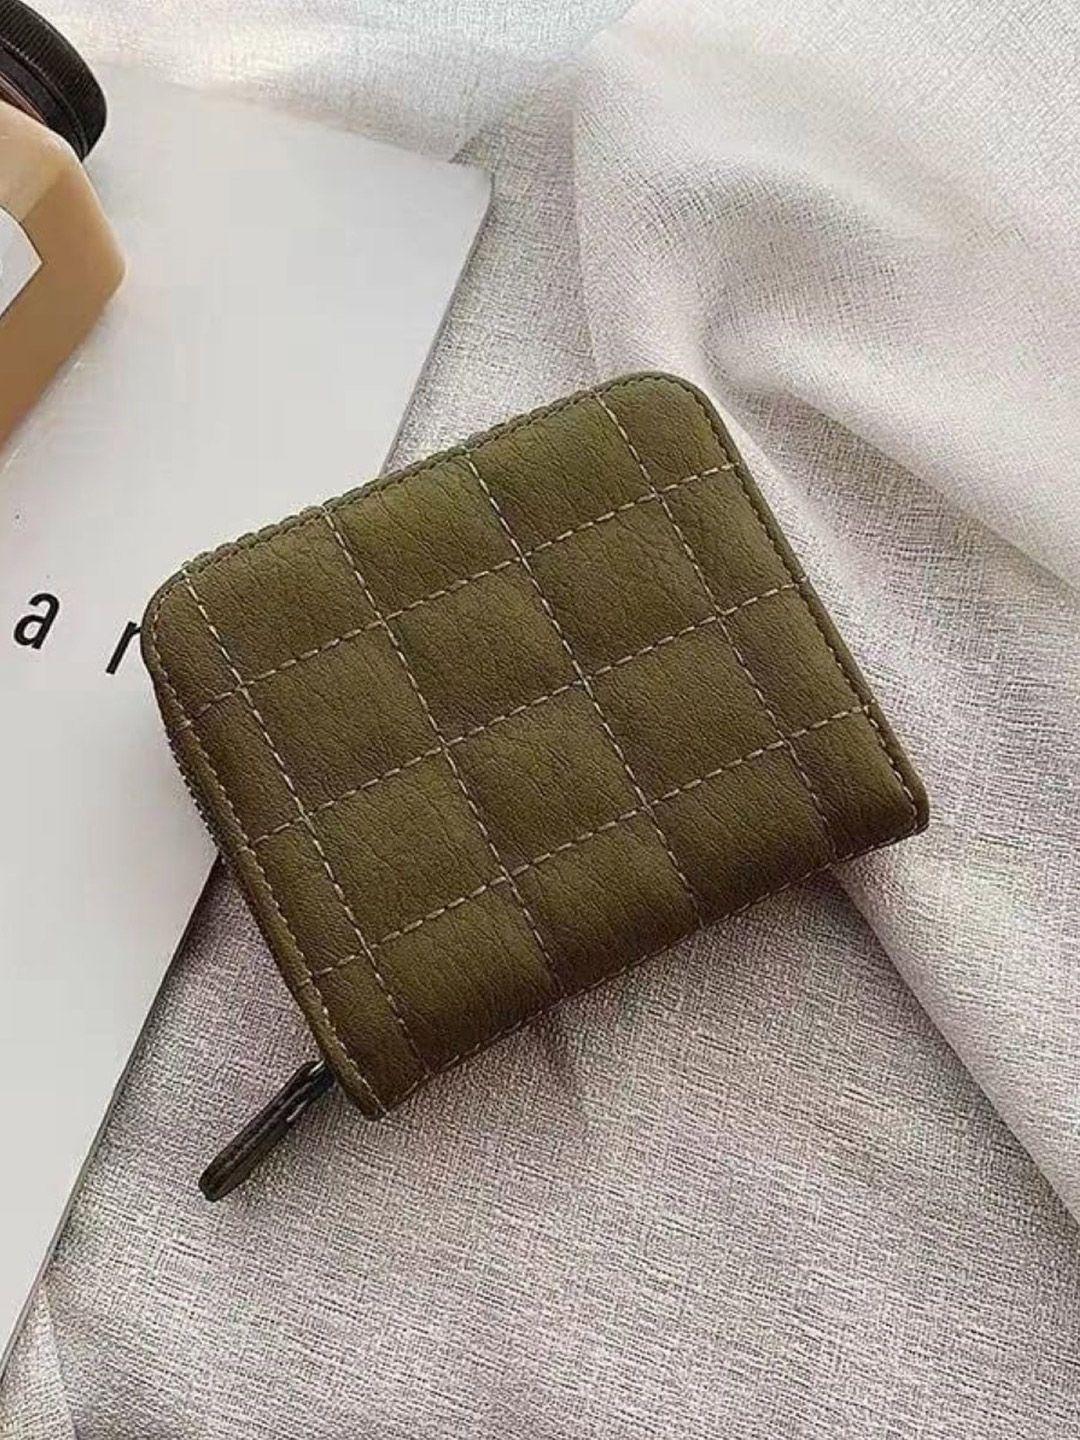 syga women leather two fold wallet